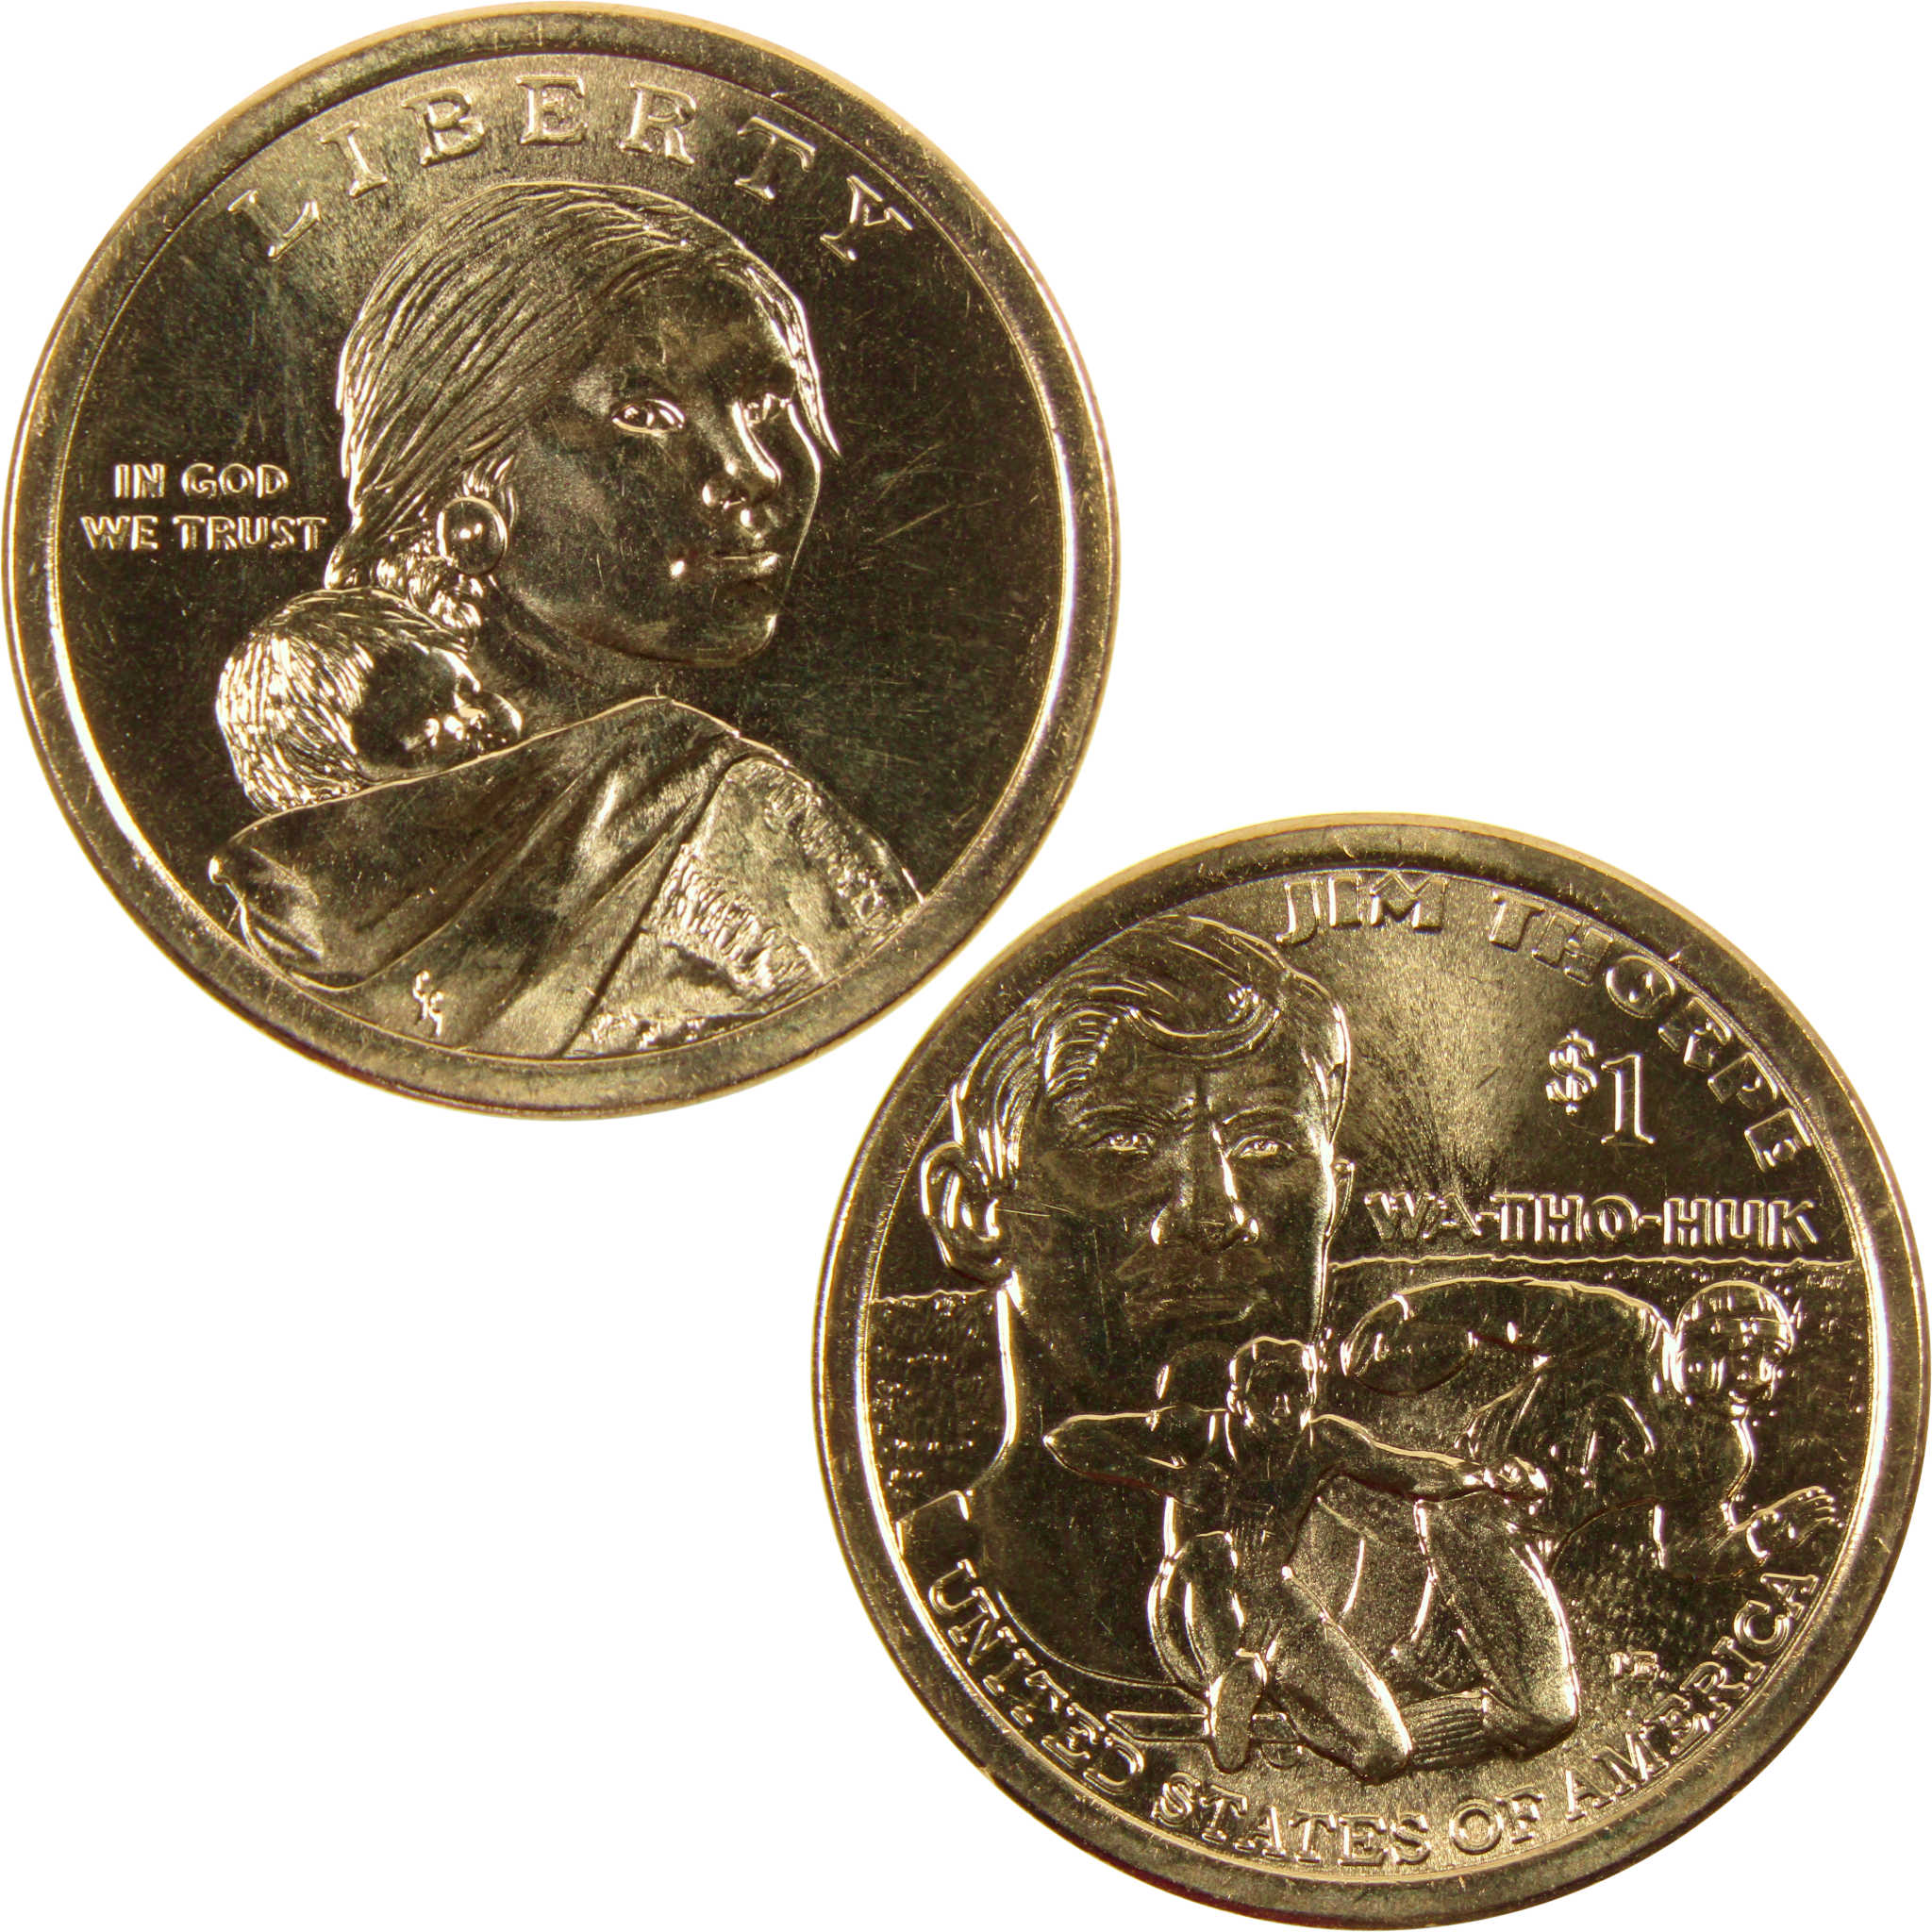 2018 D Jim Thorpe Native American Dollar BU Uncirculated $1 Coin